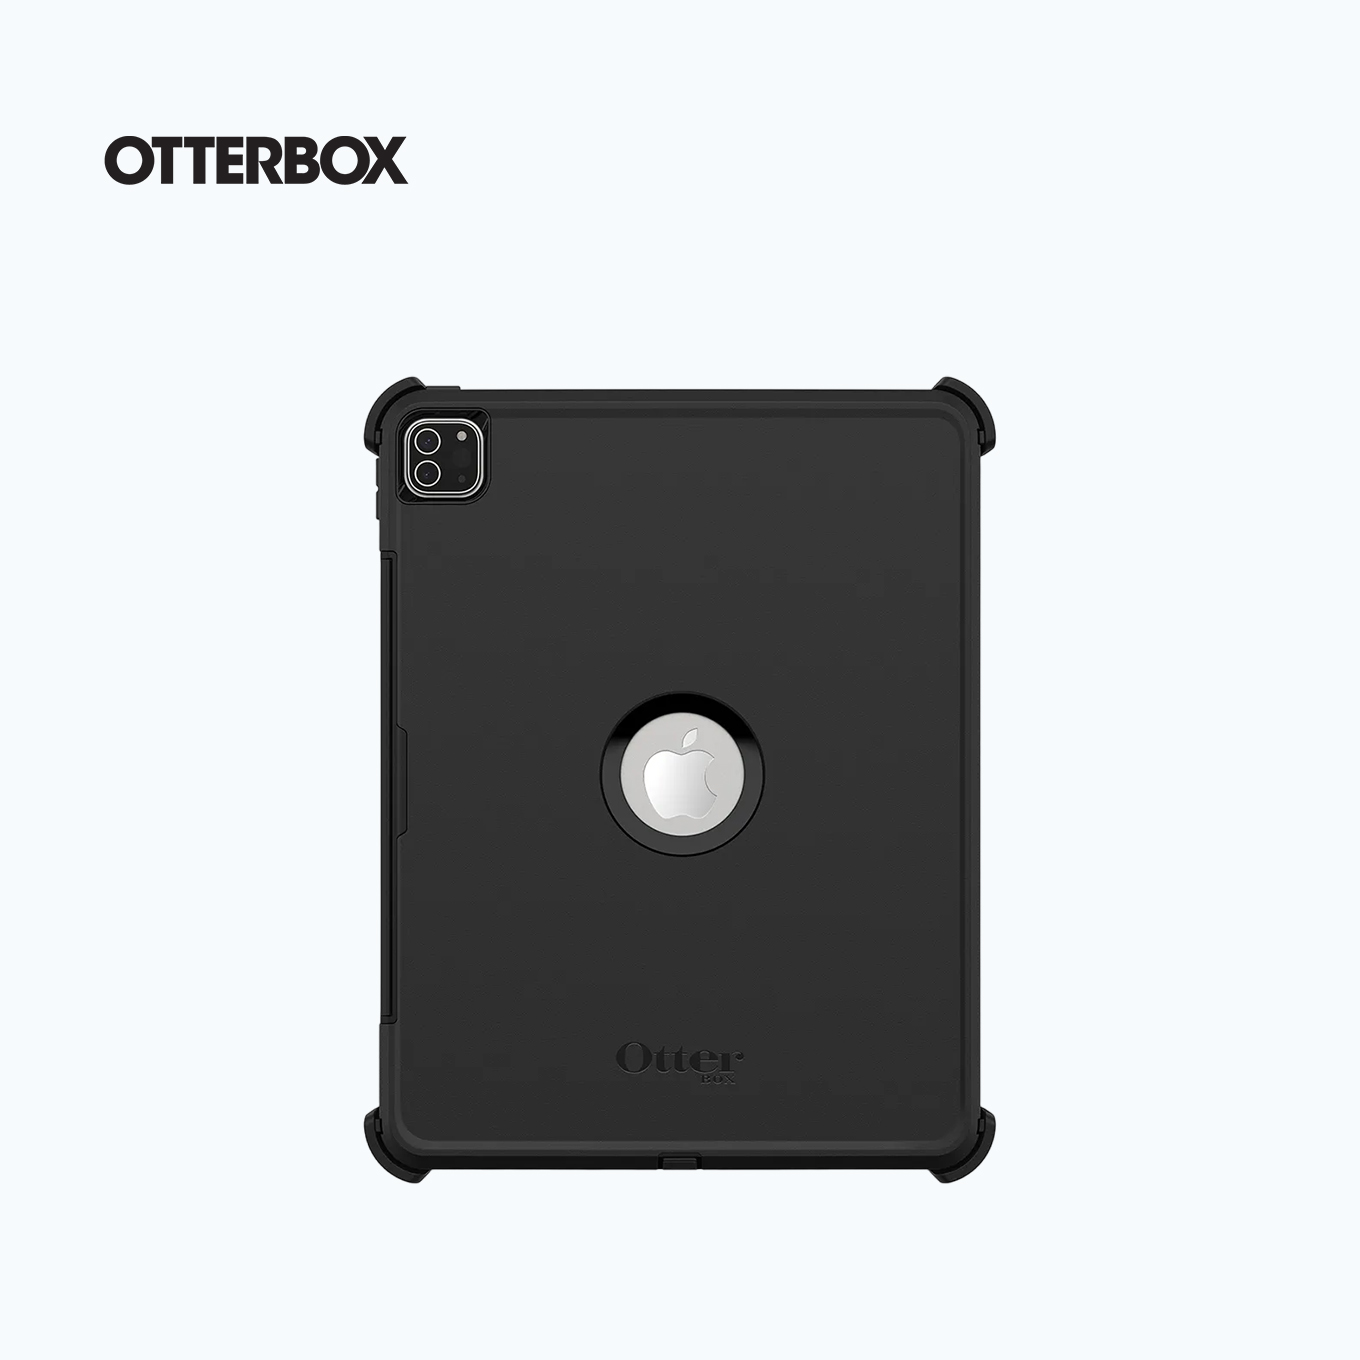 OtterBox Defender Series Case for iPad Mini/iPad/iPad Pro